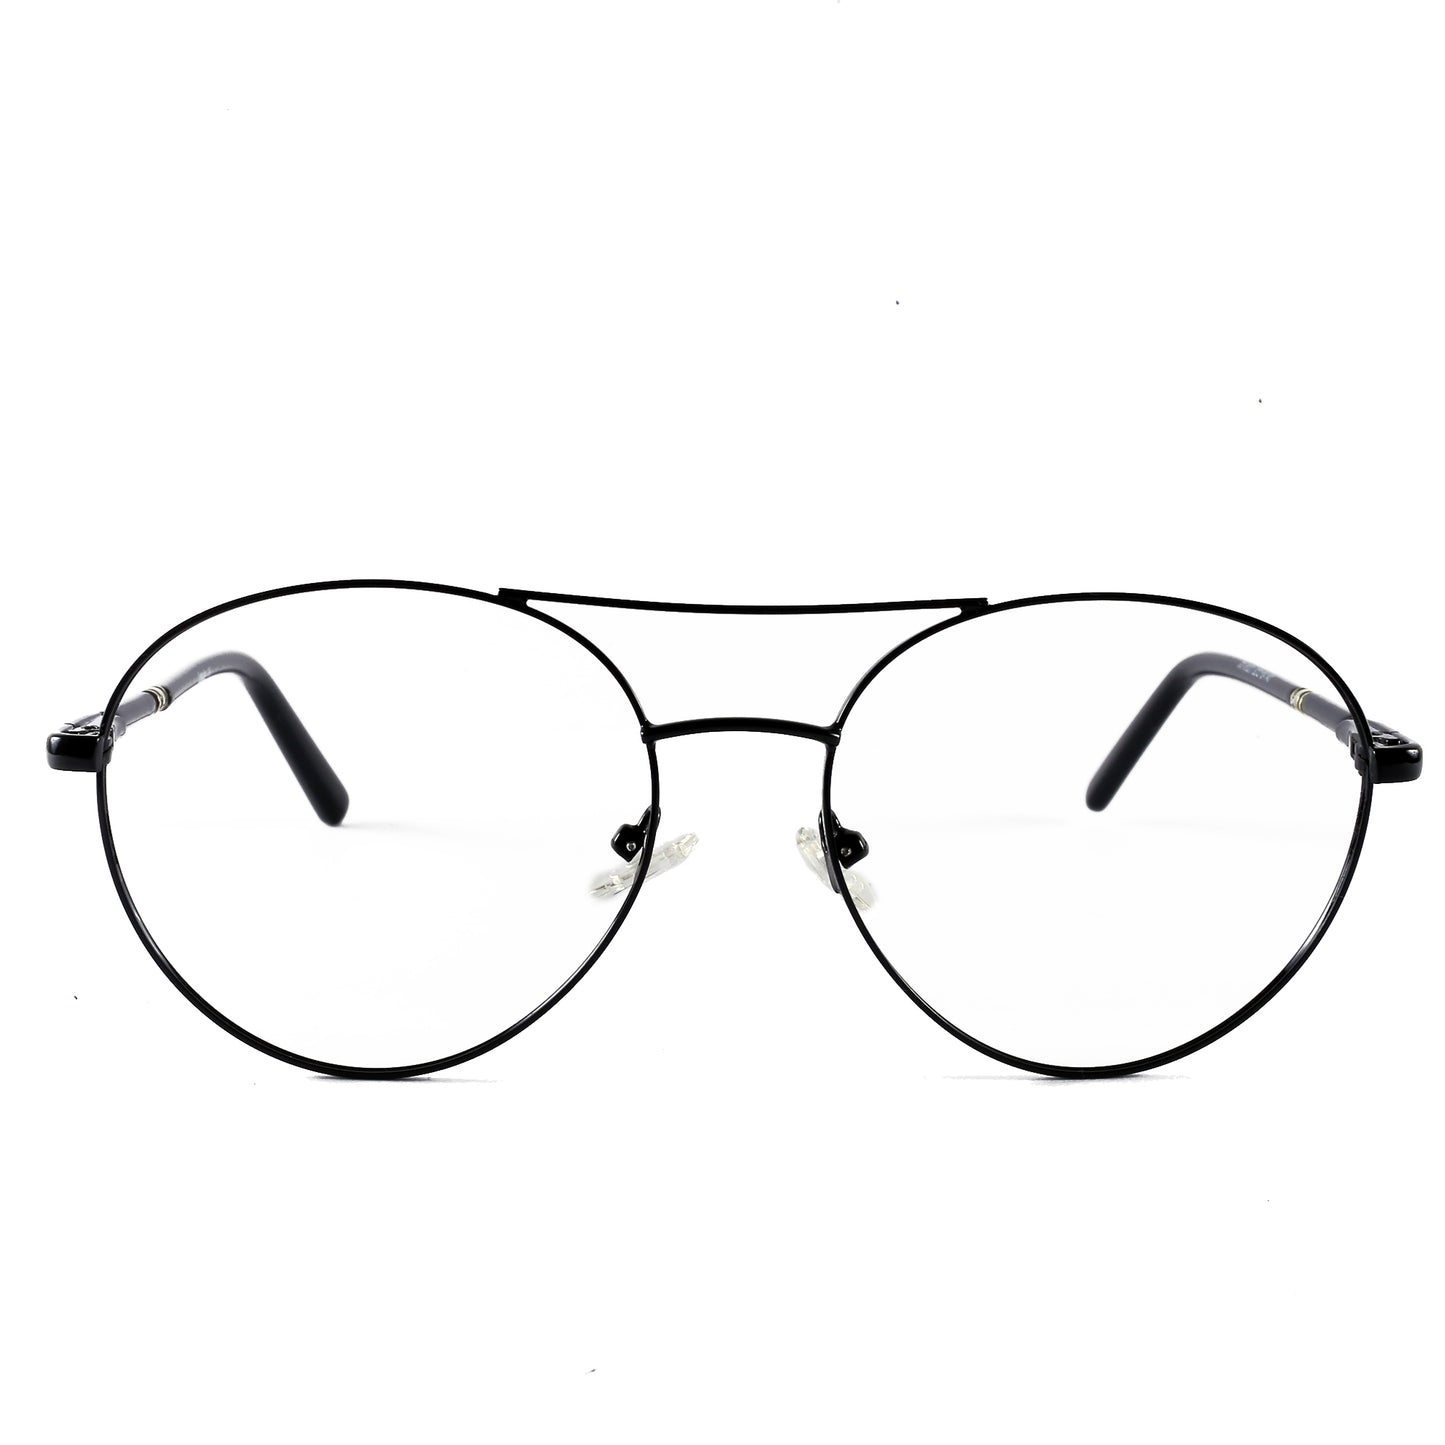 Loscomun Computer Glasses Silver Aviator Eyeglasses